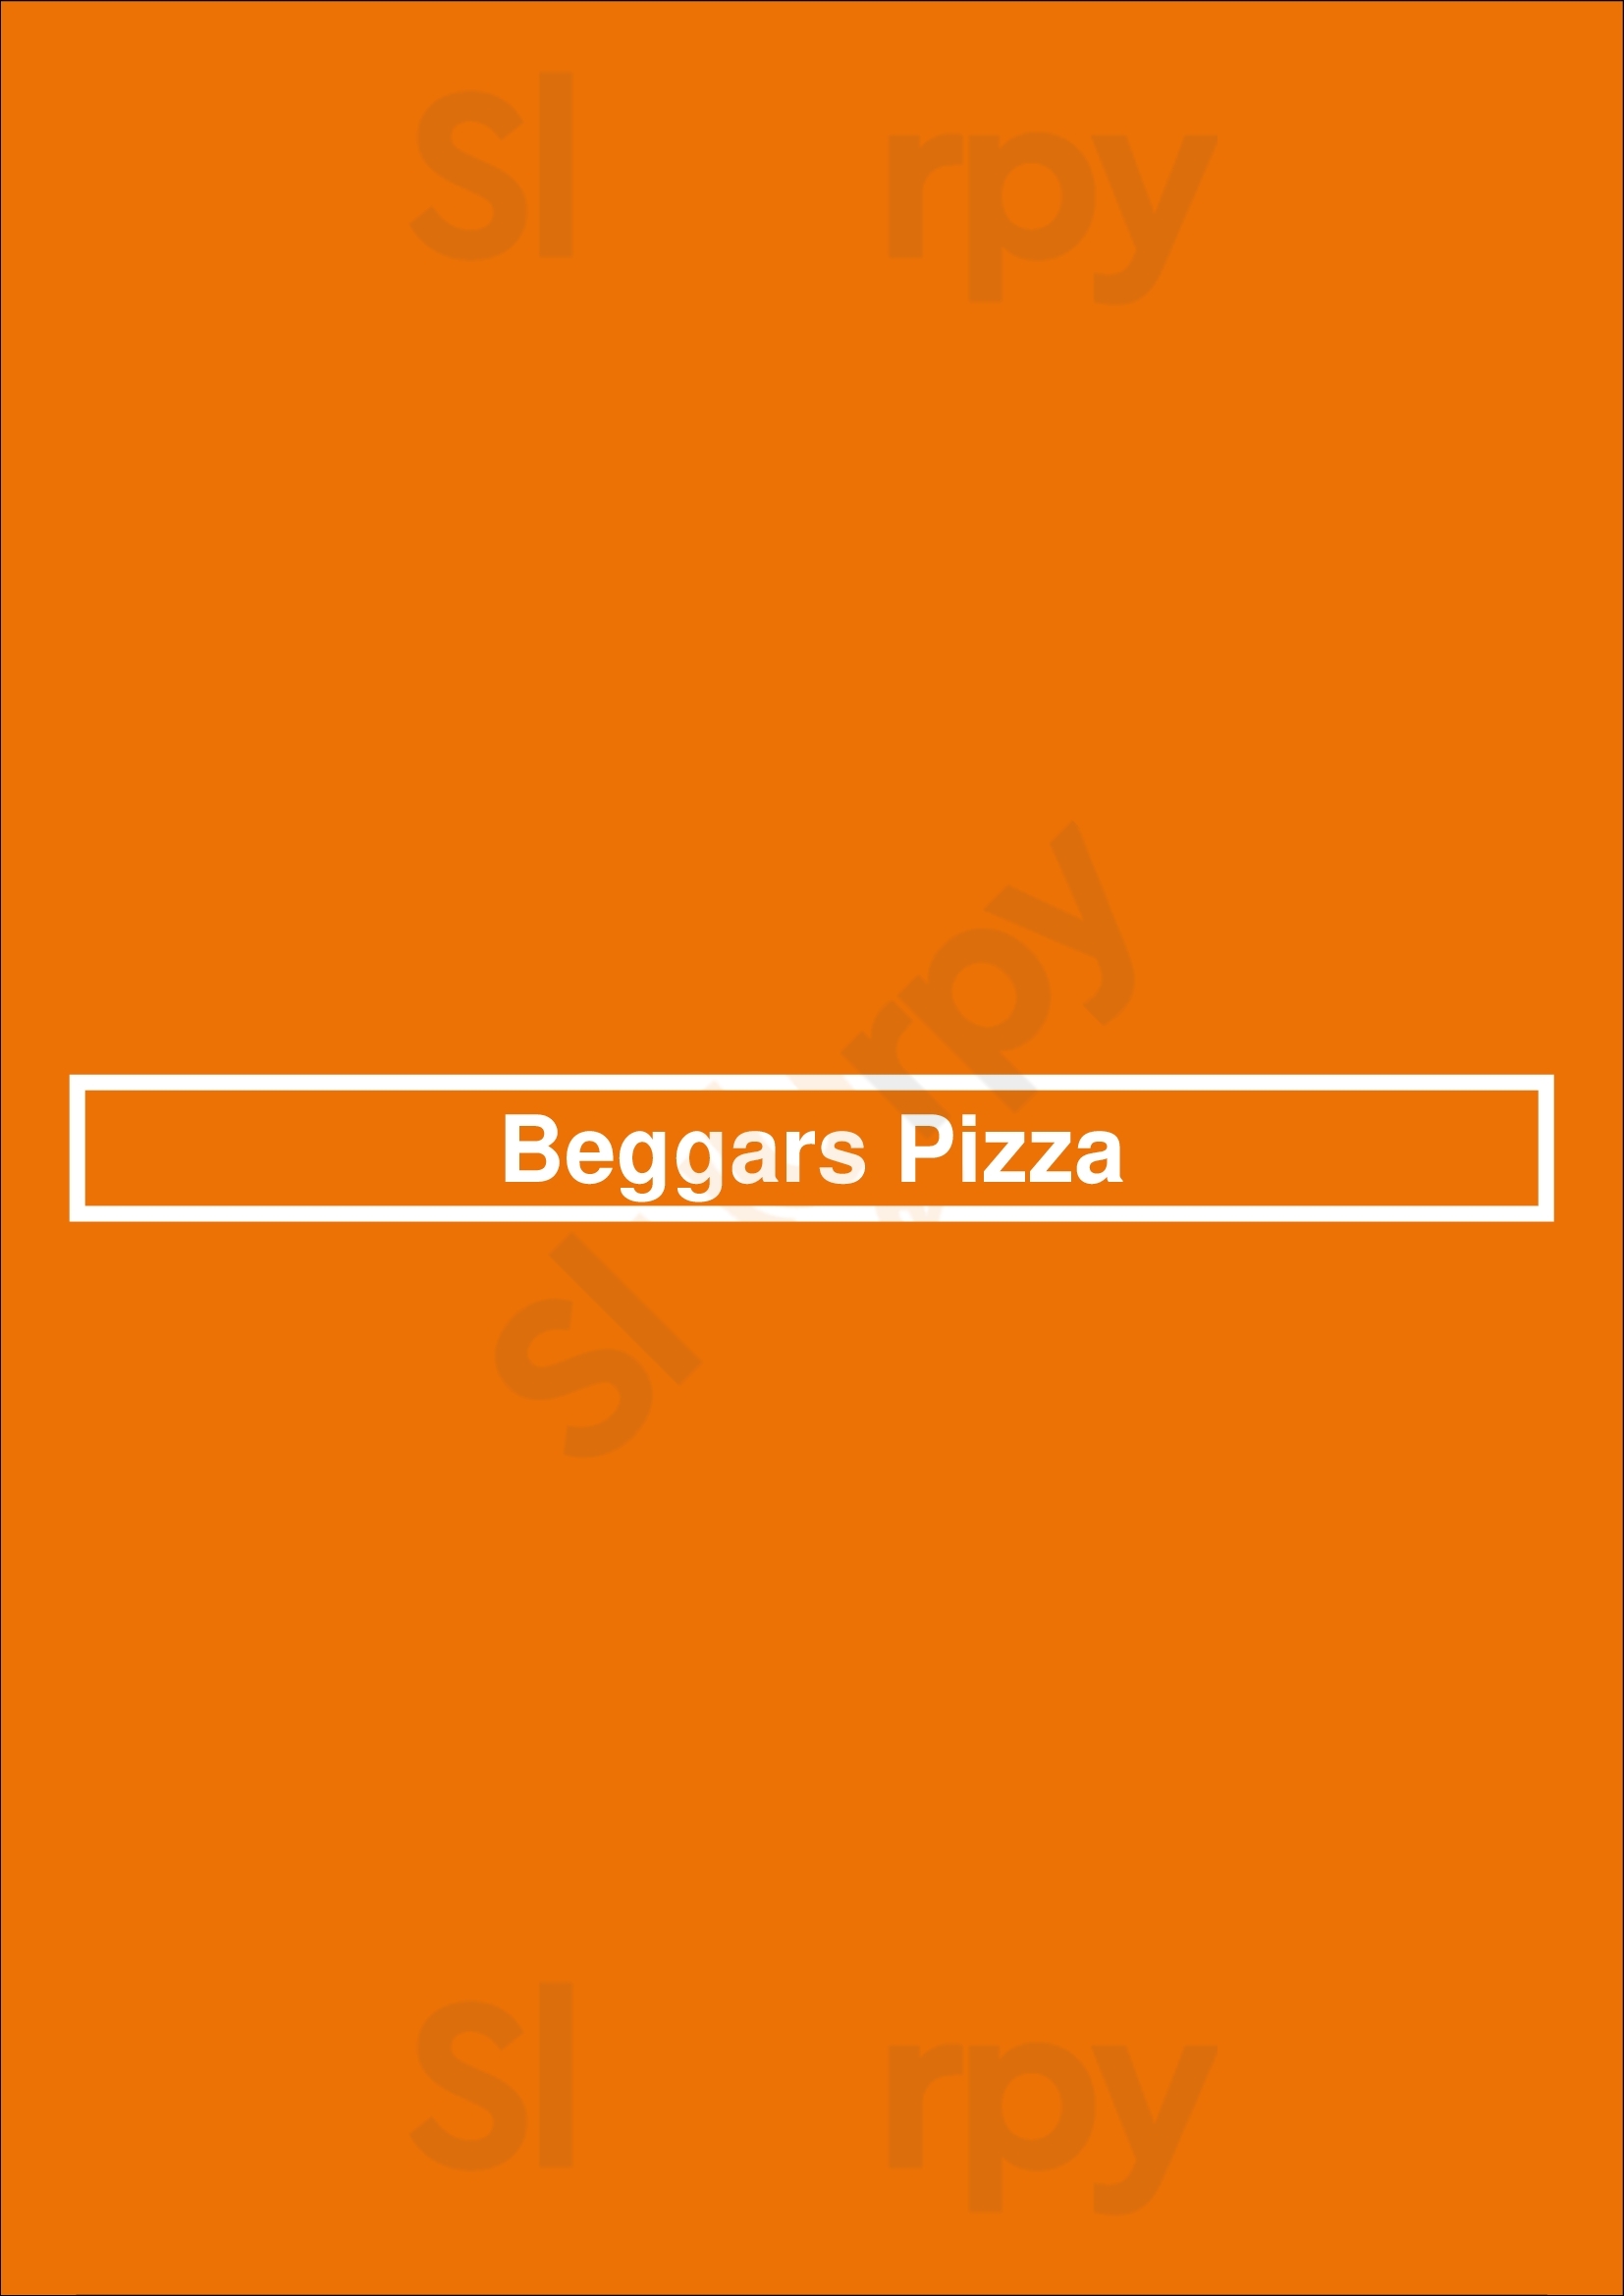 Beggars Pizza Chicago Menu - 1